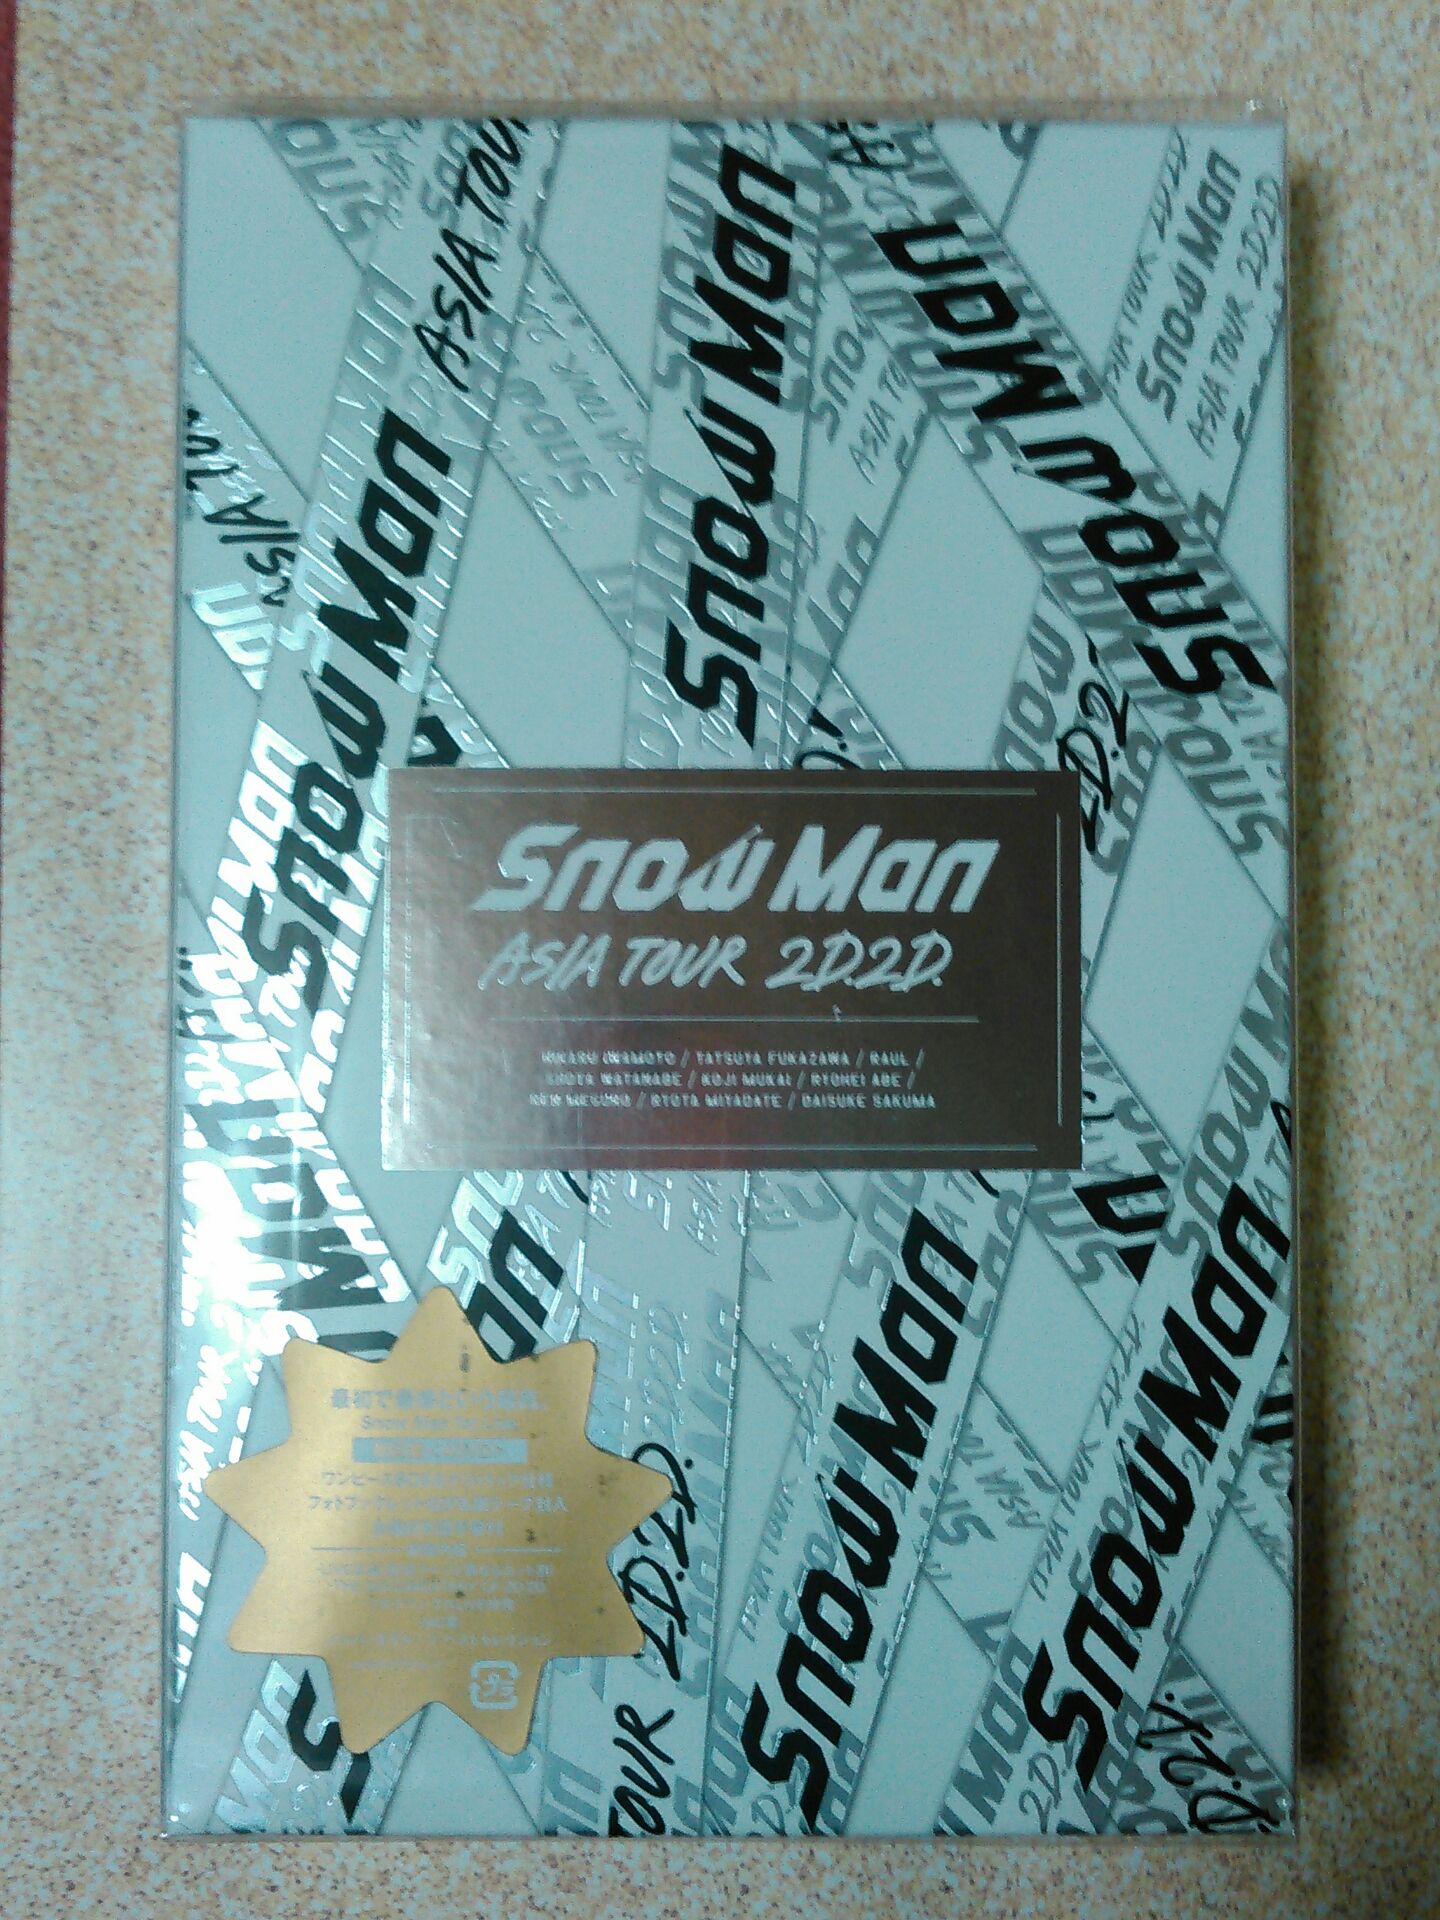 DVD『Snow Man ASIA TOUR 2D.2D.』初回盤 ネタバレ | ☆In the Kanae-Land. at KaNaE